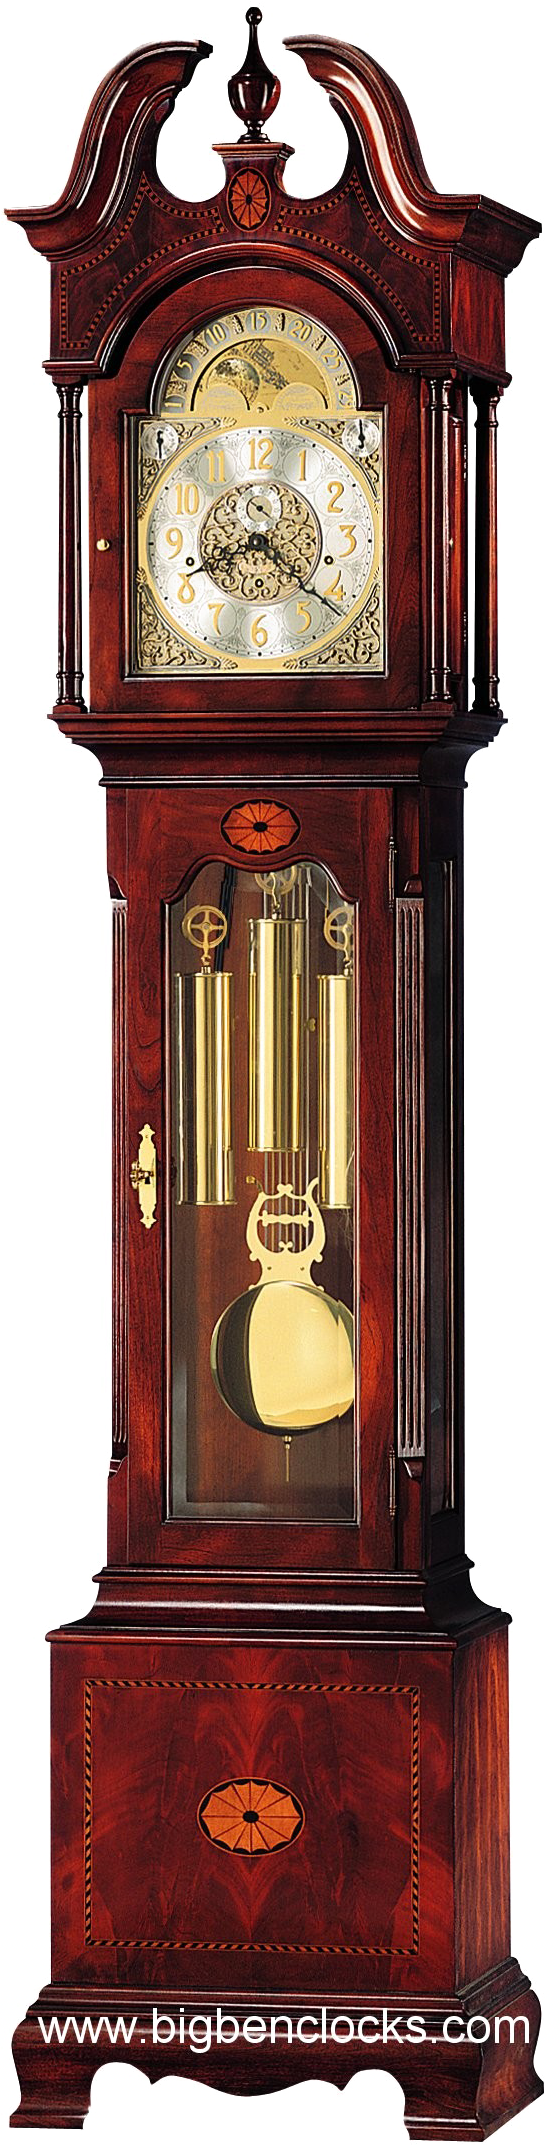 A Grandfather Clock With A Gold Pendulum